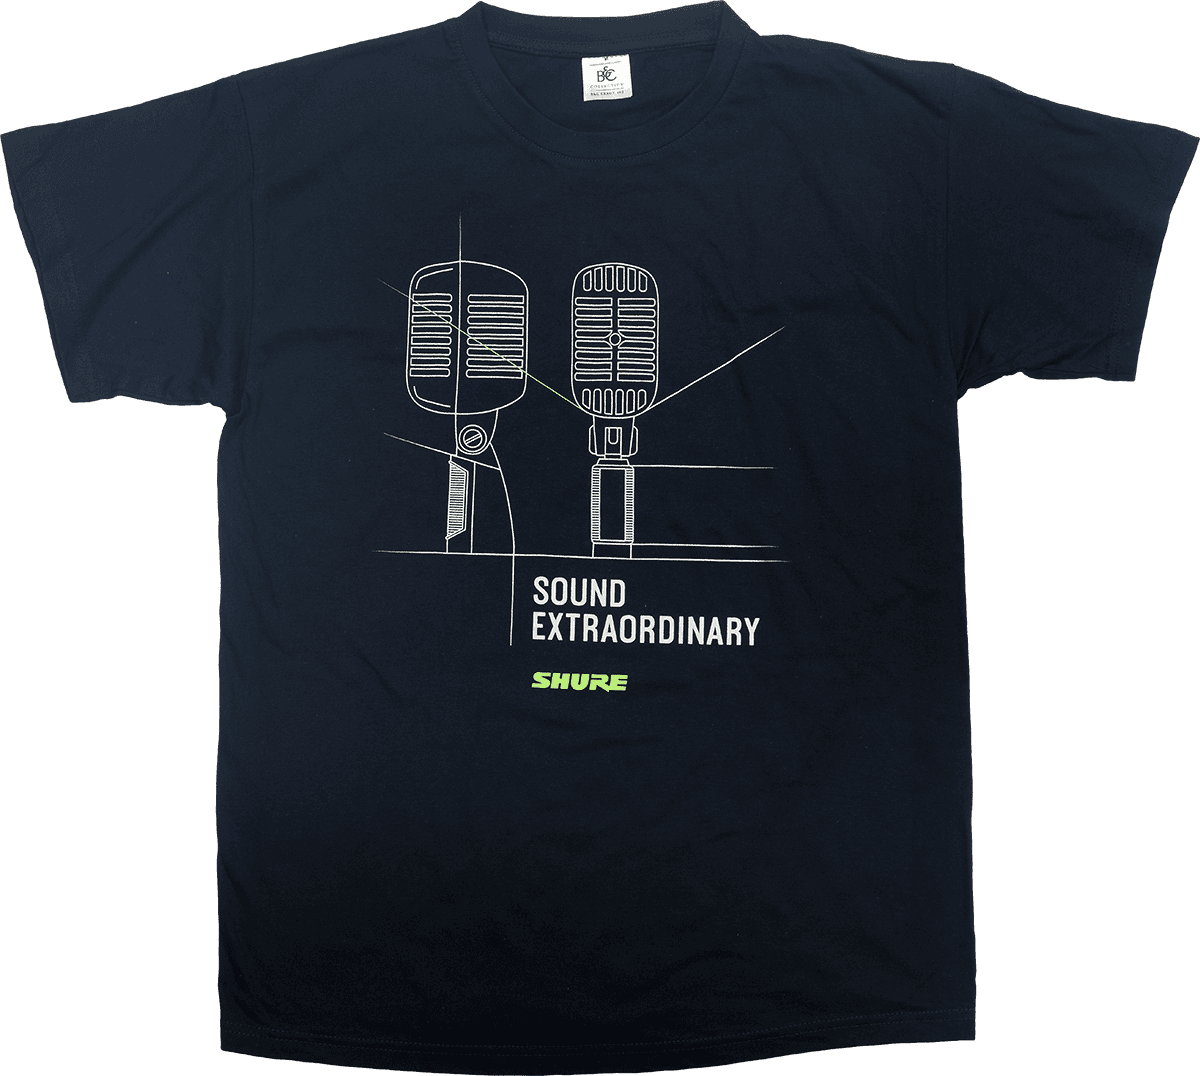 Shure T-shirt Noir Super 55 Logo Vert, Taille S - Camiseta - Main picture